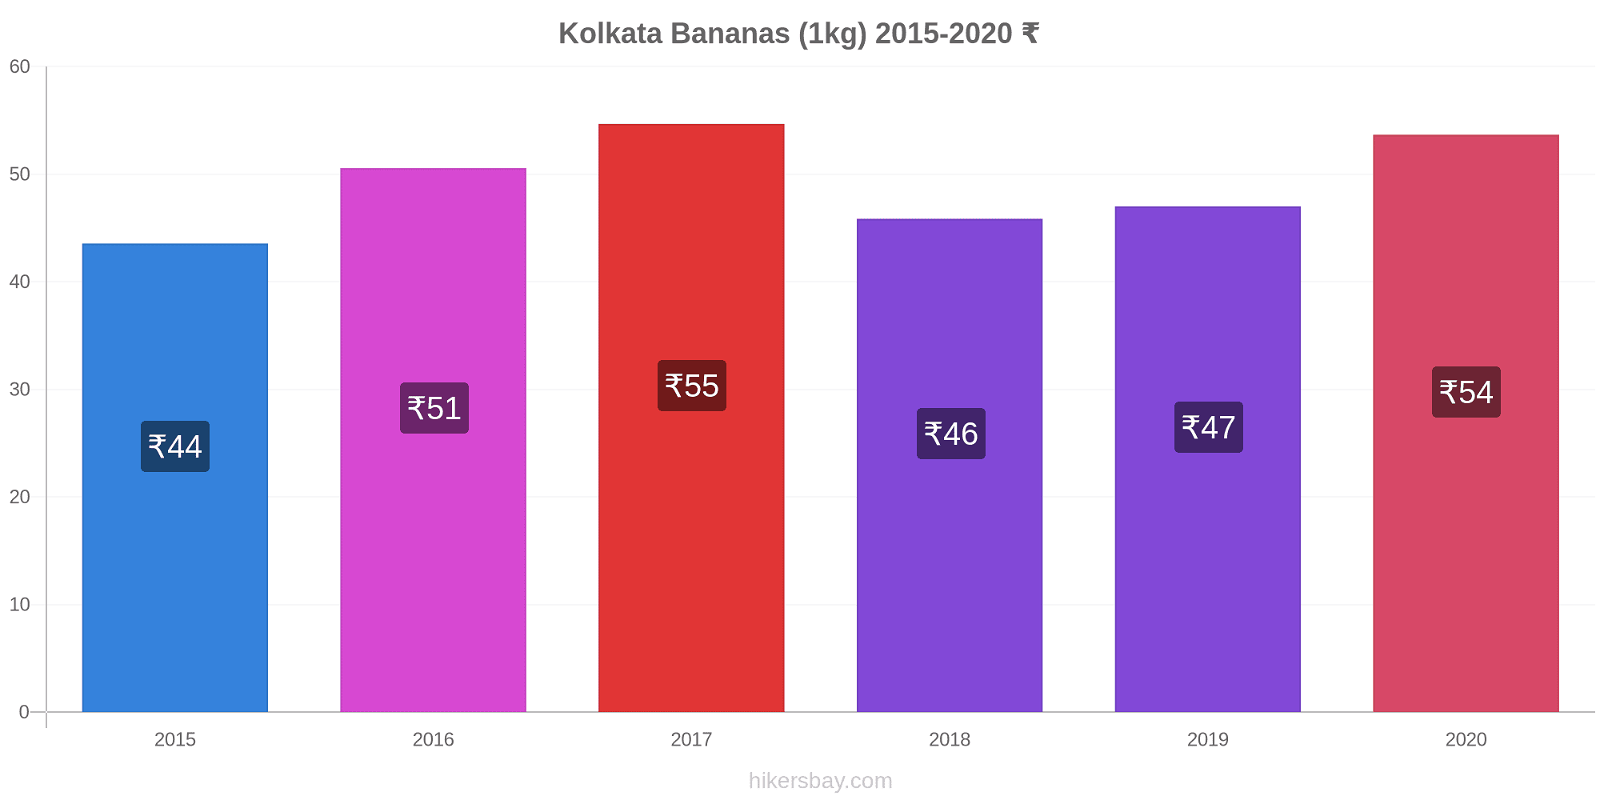 Kolkata price changes Bananas (1kg) hikersbay.com